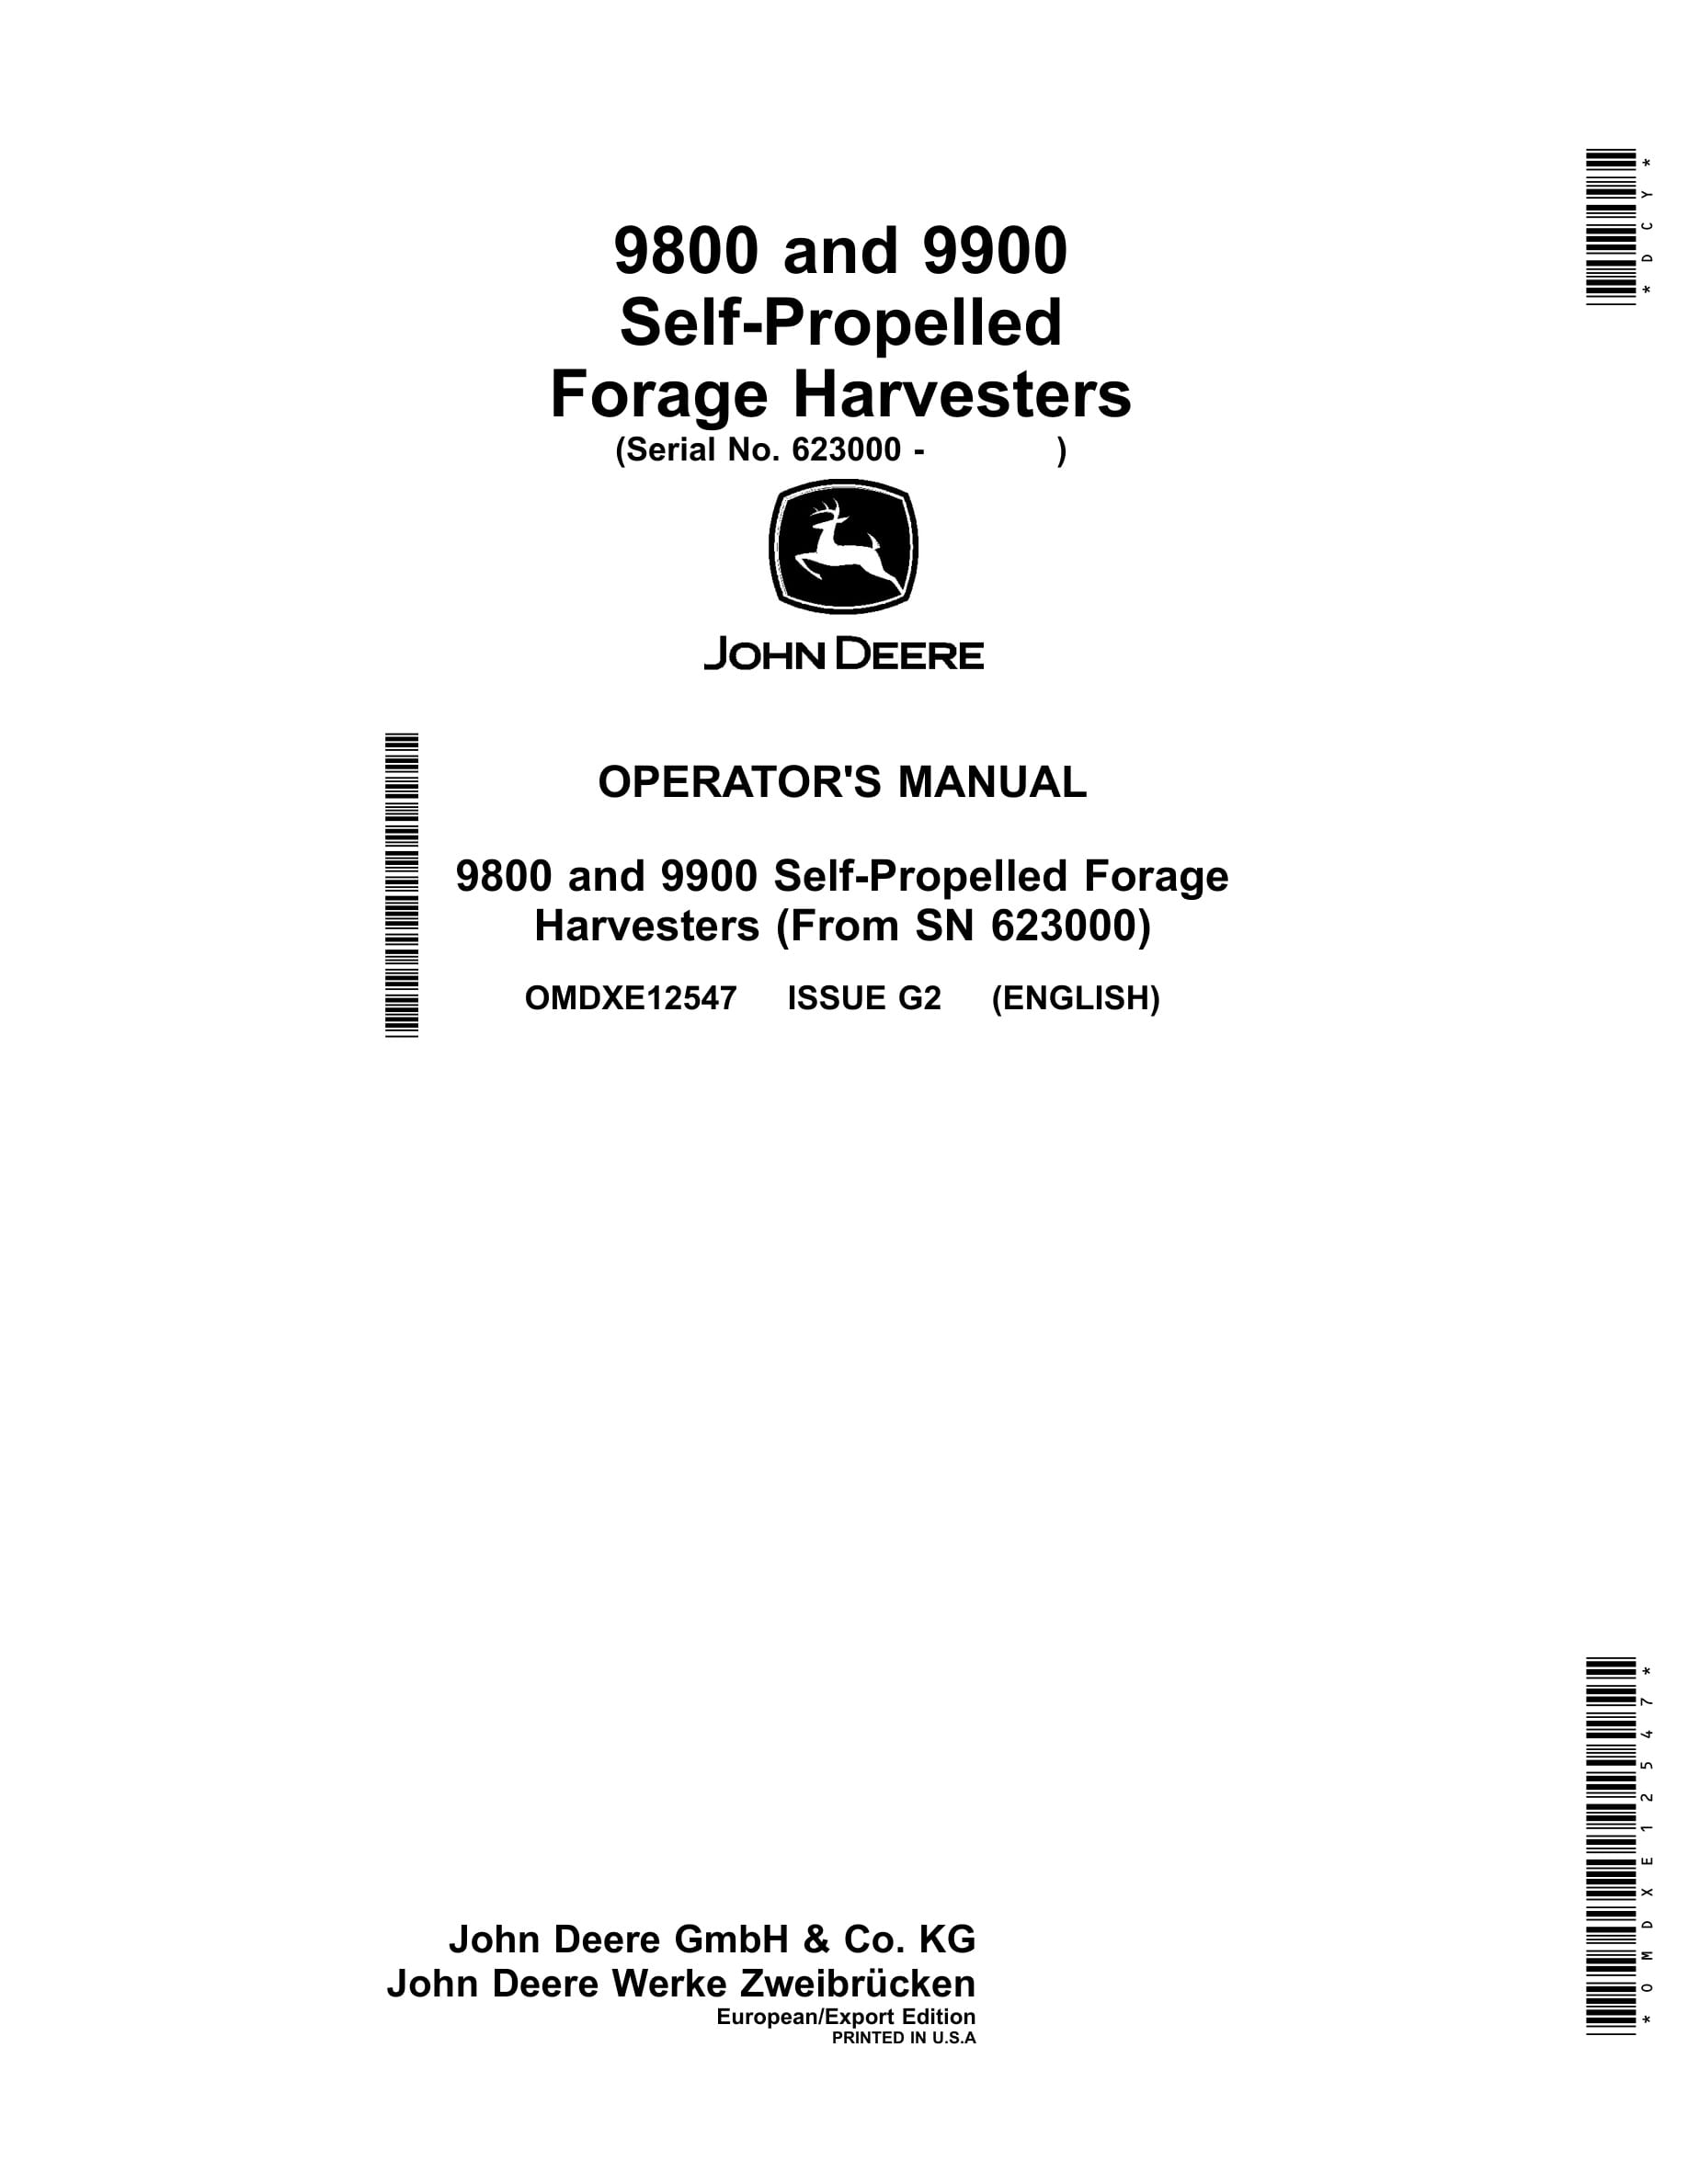 John Deere 9800 and 9900 Self-Propelled Forage Harvester Operator Manual OMDXE12547-1